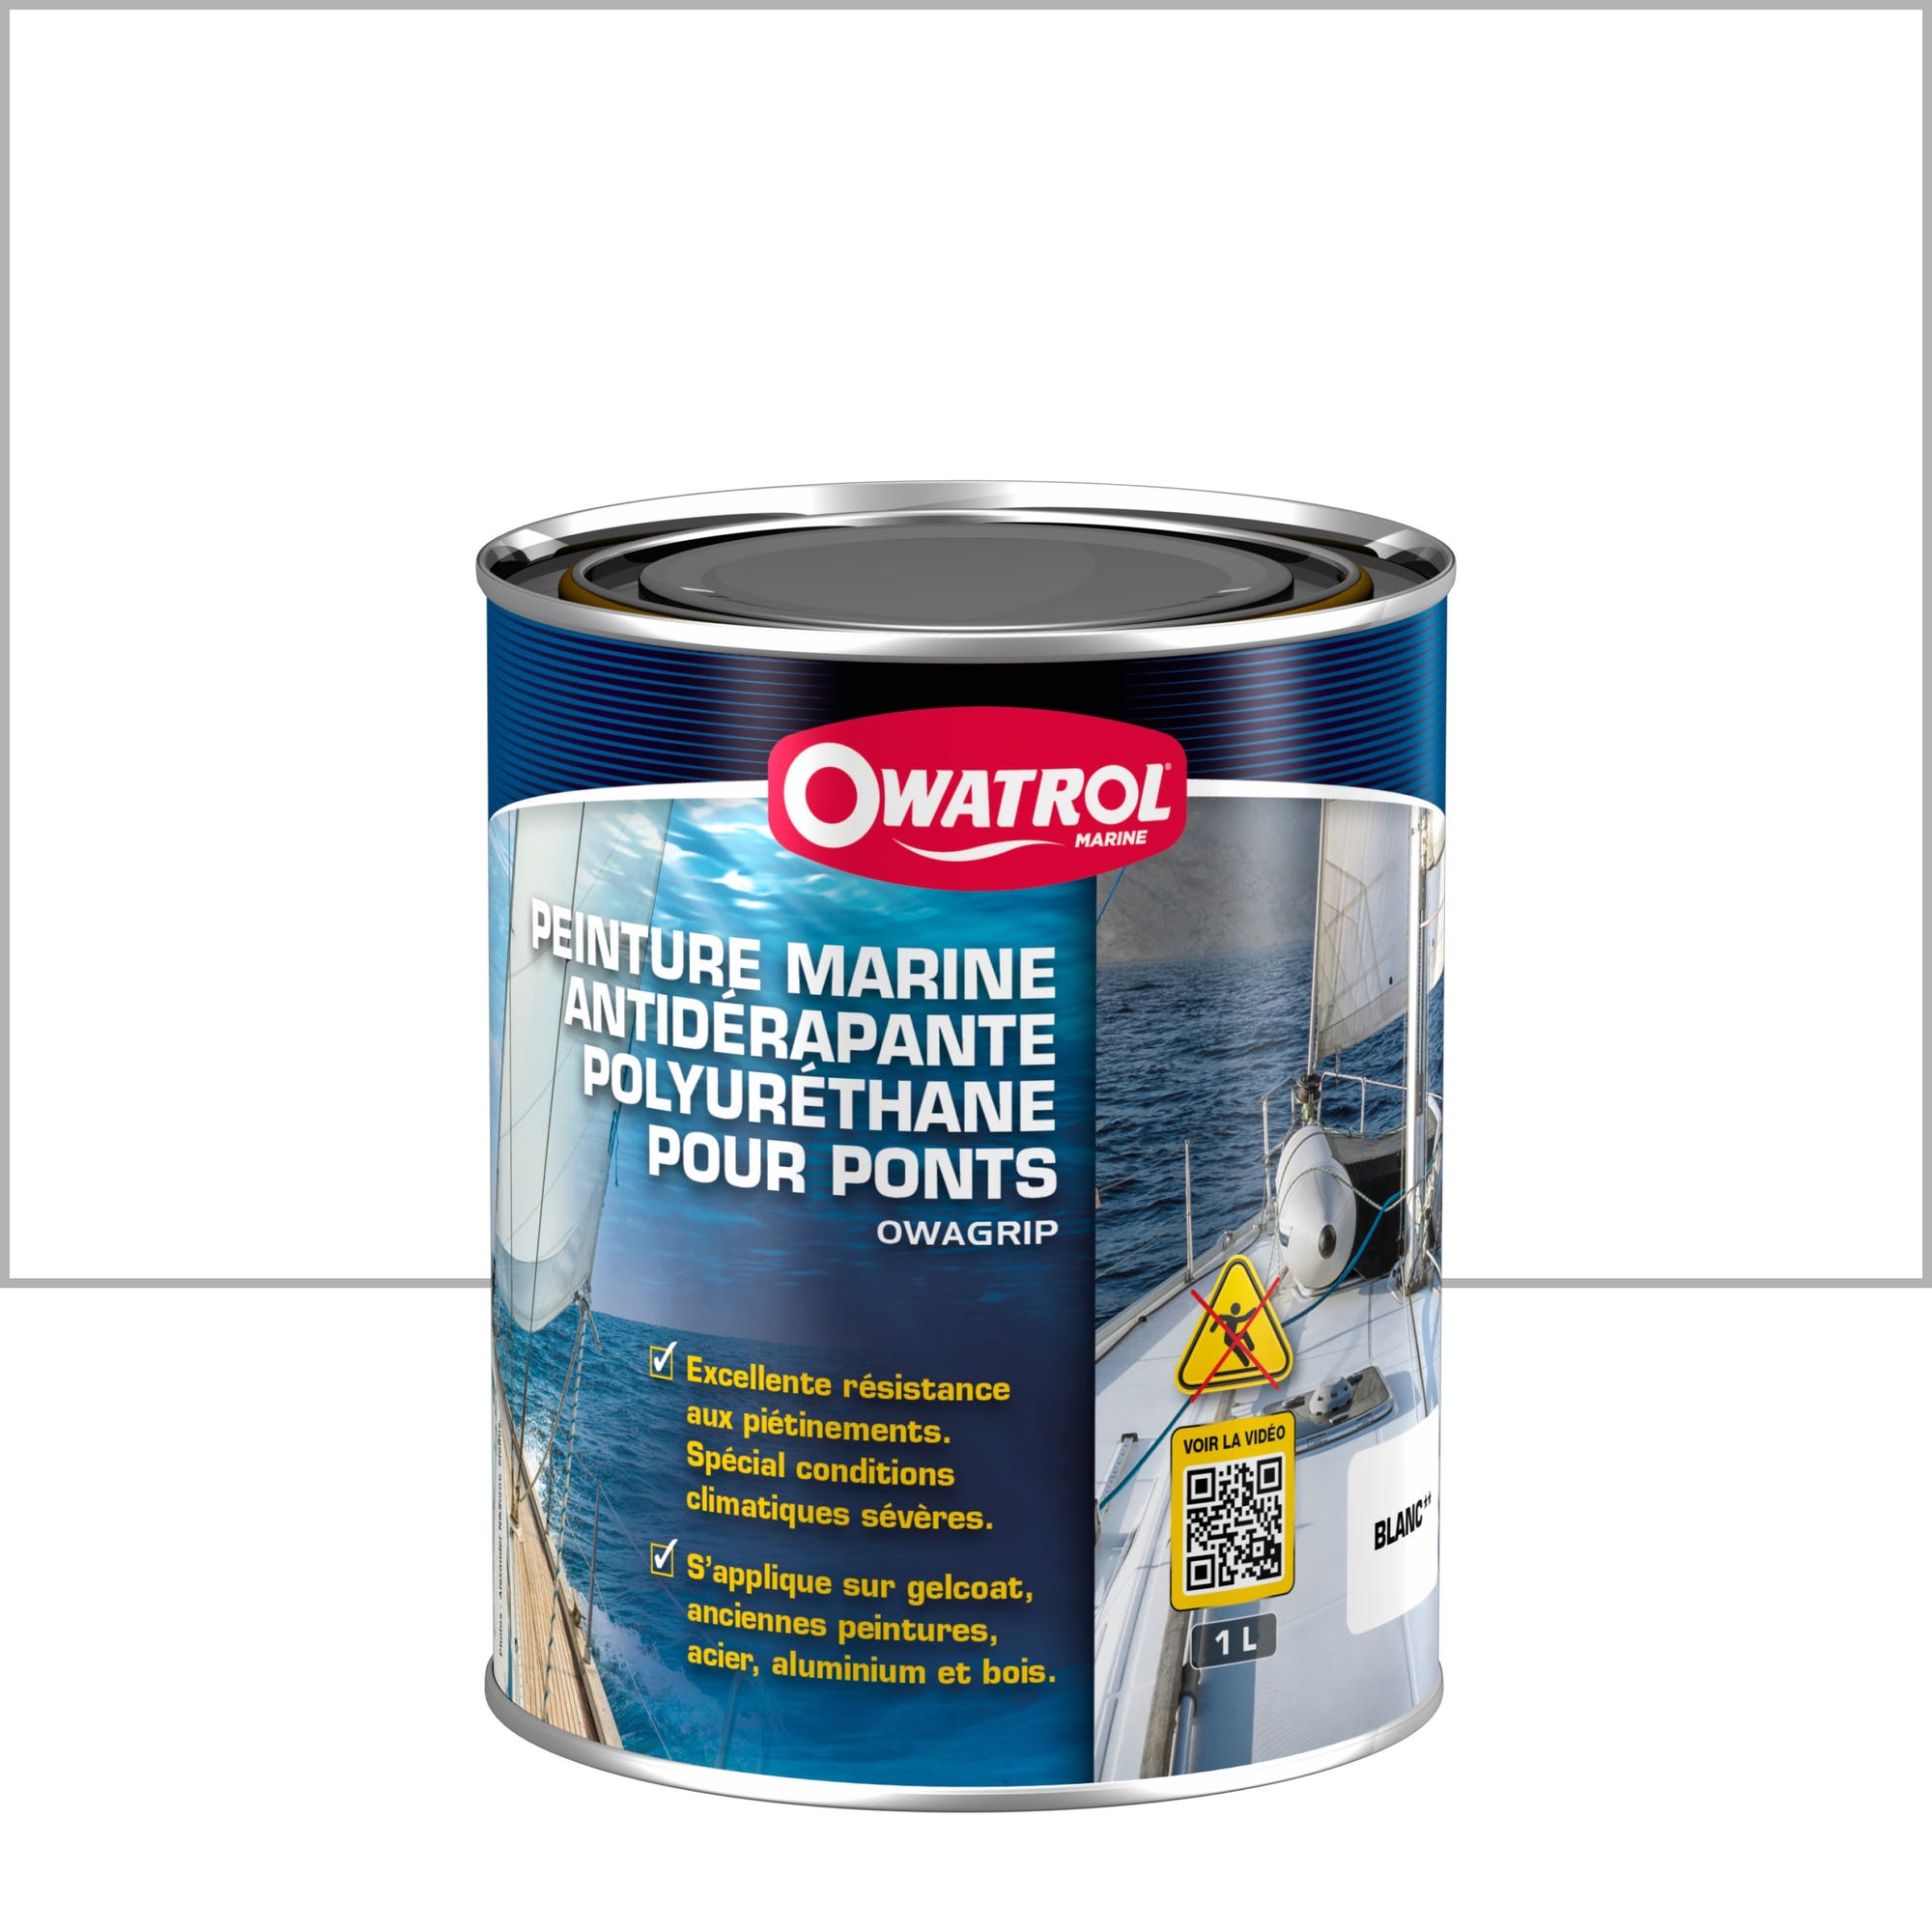 Peinture marine antidérapante polyuréthane pour ponts Owatrol OWAGRIP Blanc (owm6) 1 litre 0